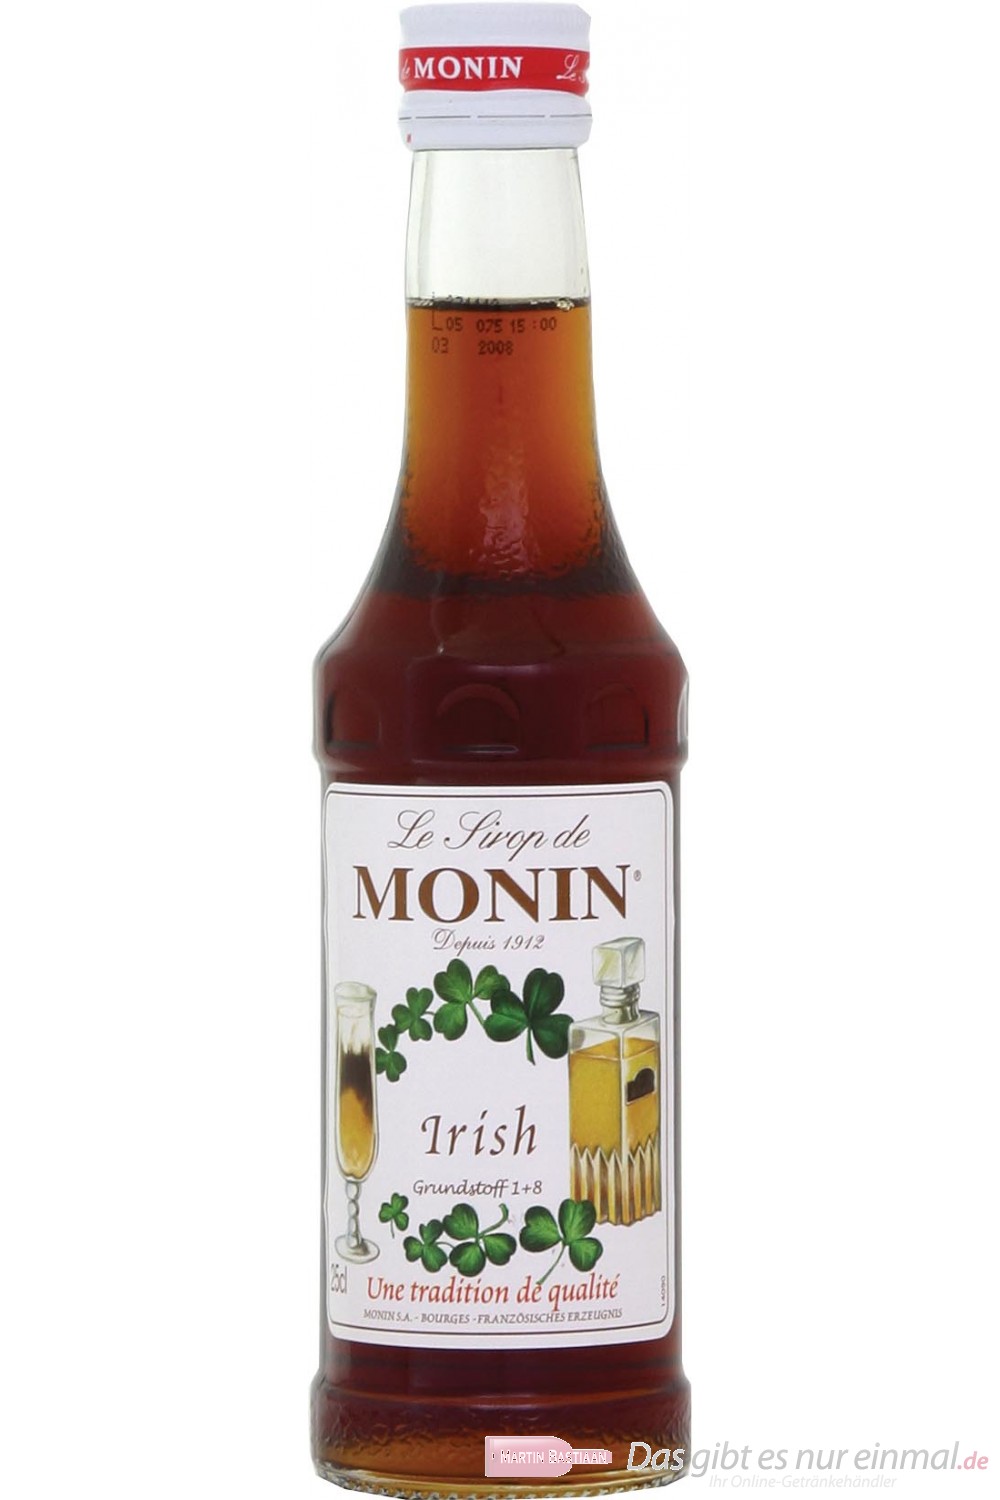 Le Sirop de Monin Irish Sirup 1:8 0,25l Flasche